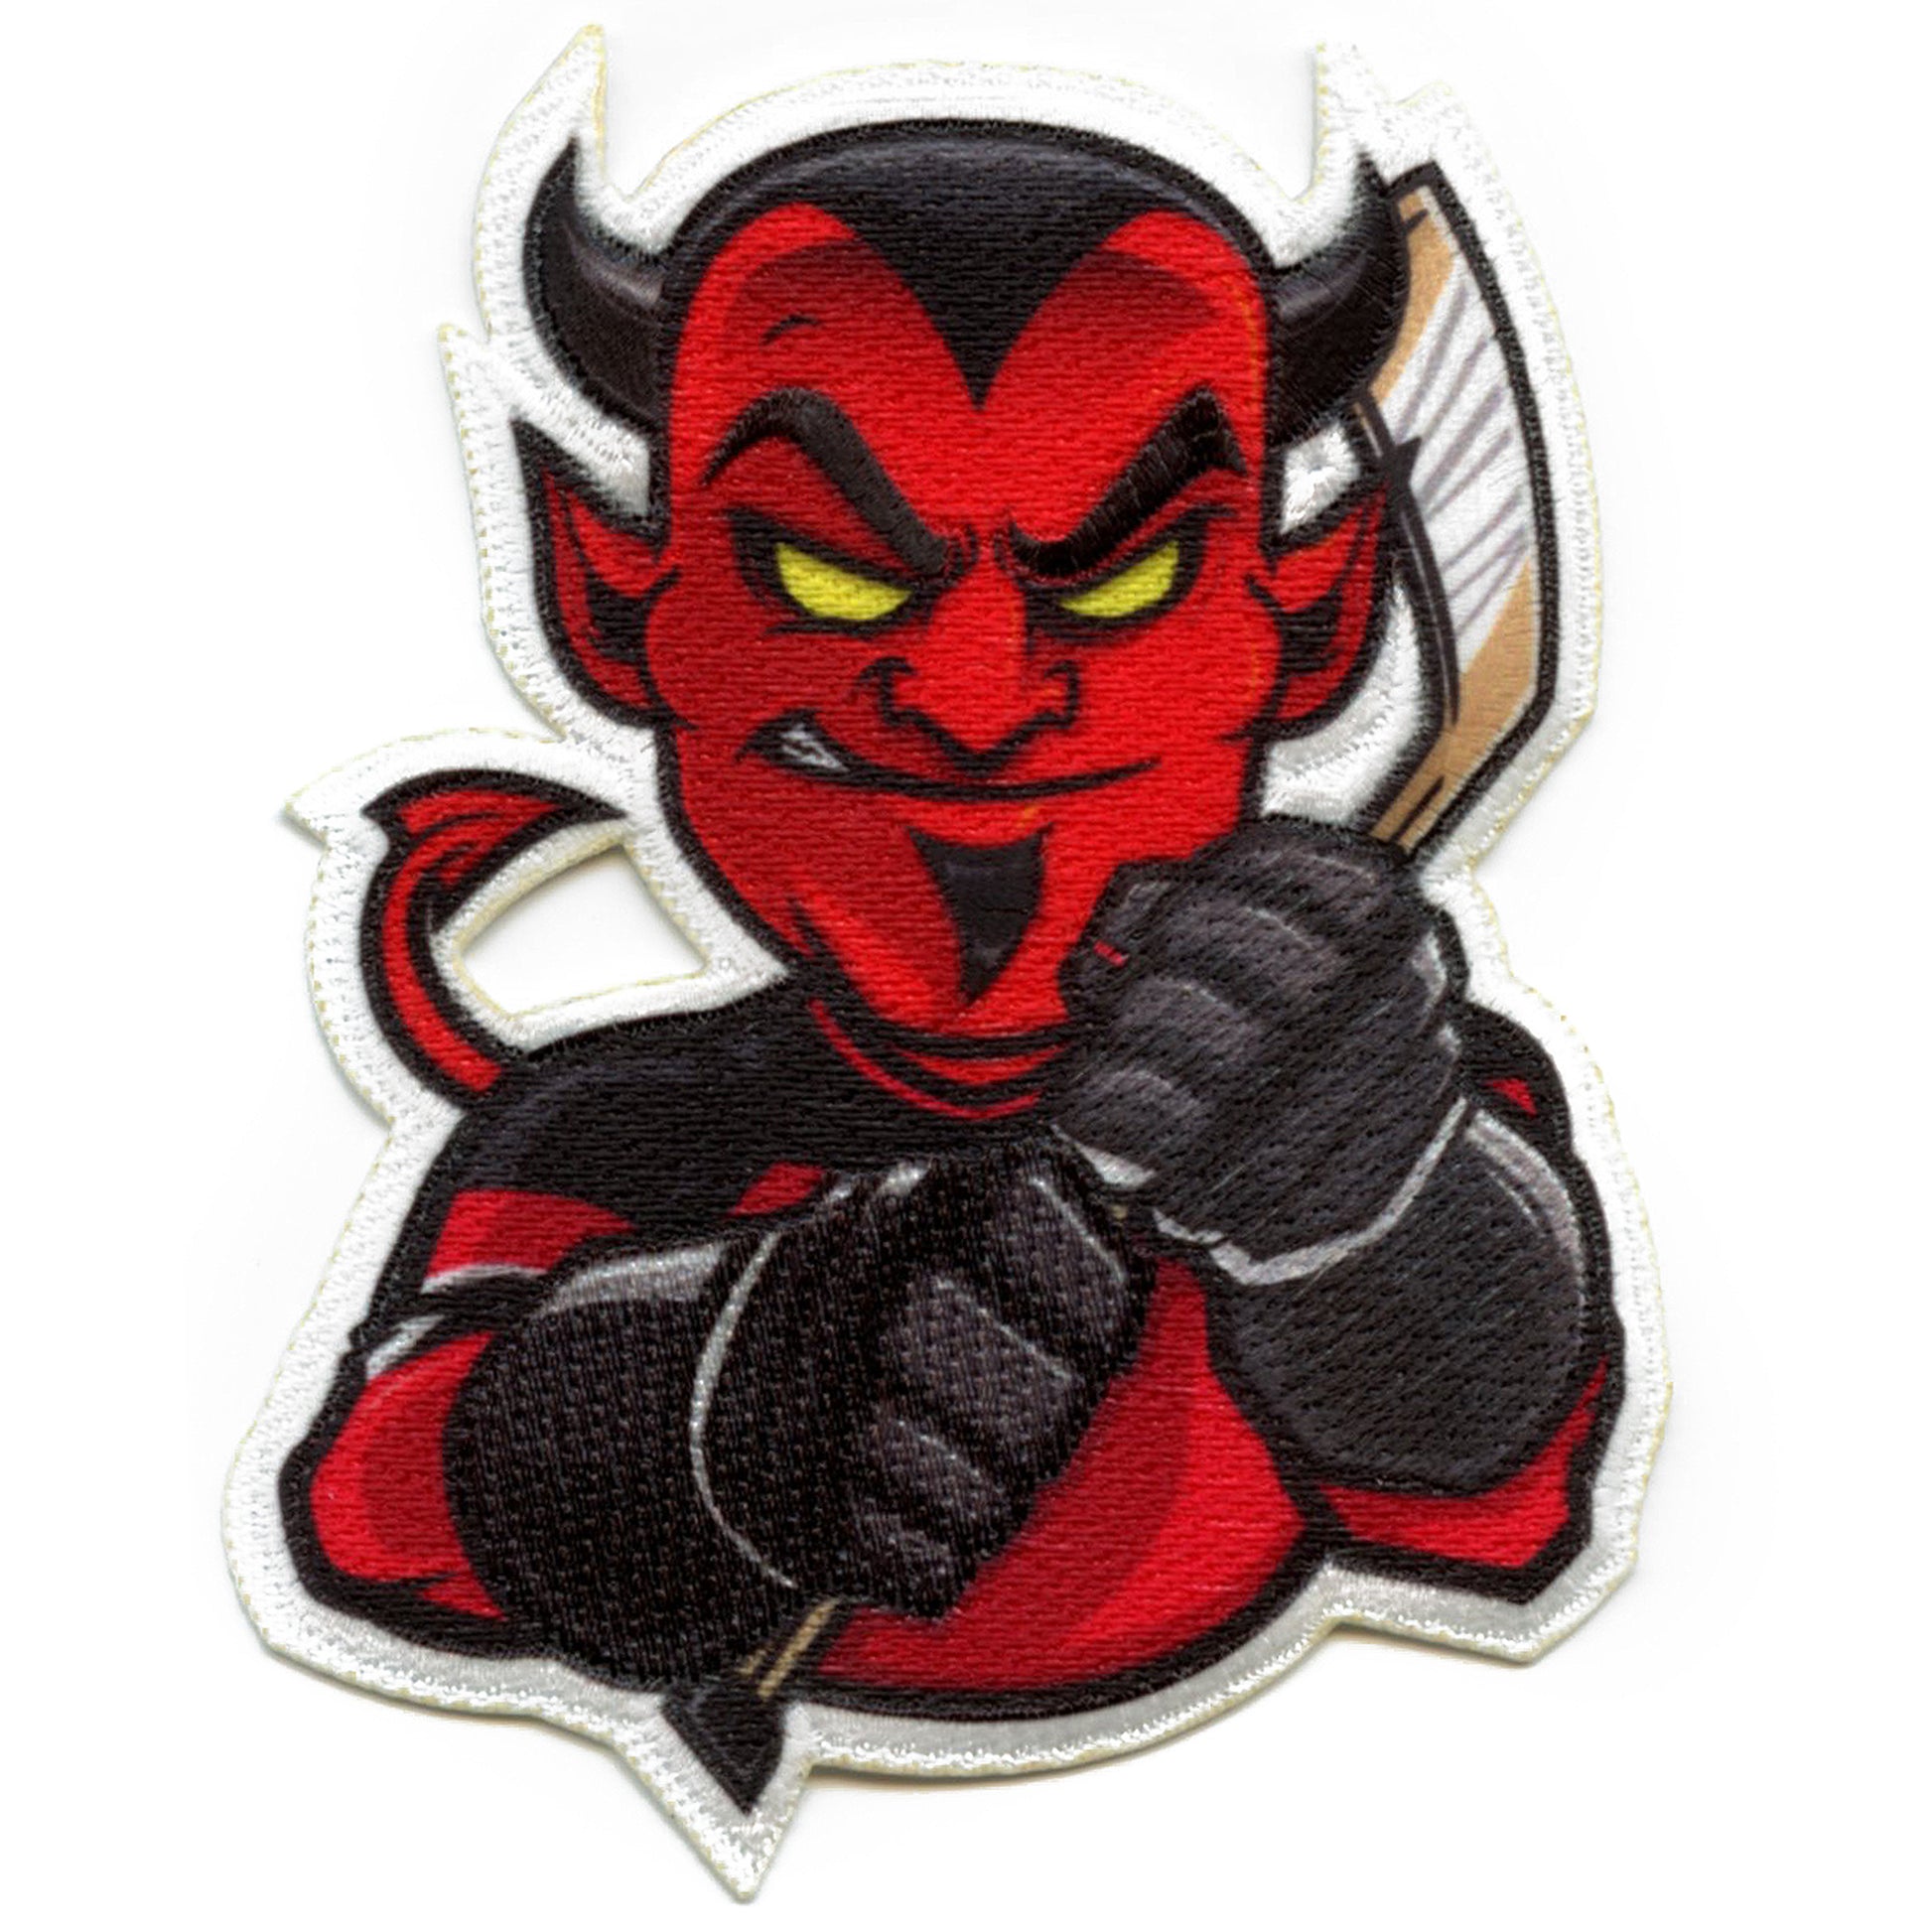 New jersey devils hockey jersey -  Nederland